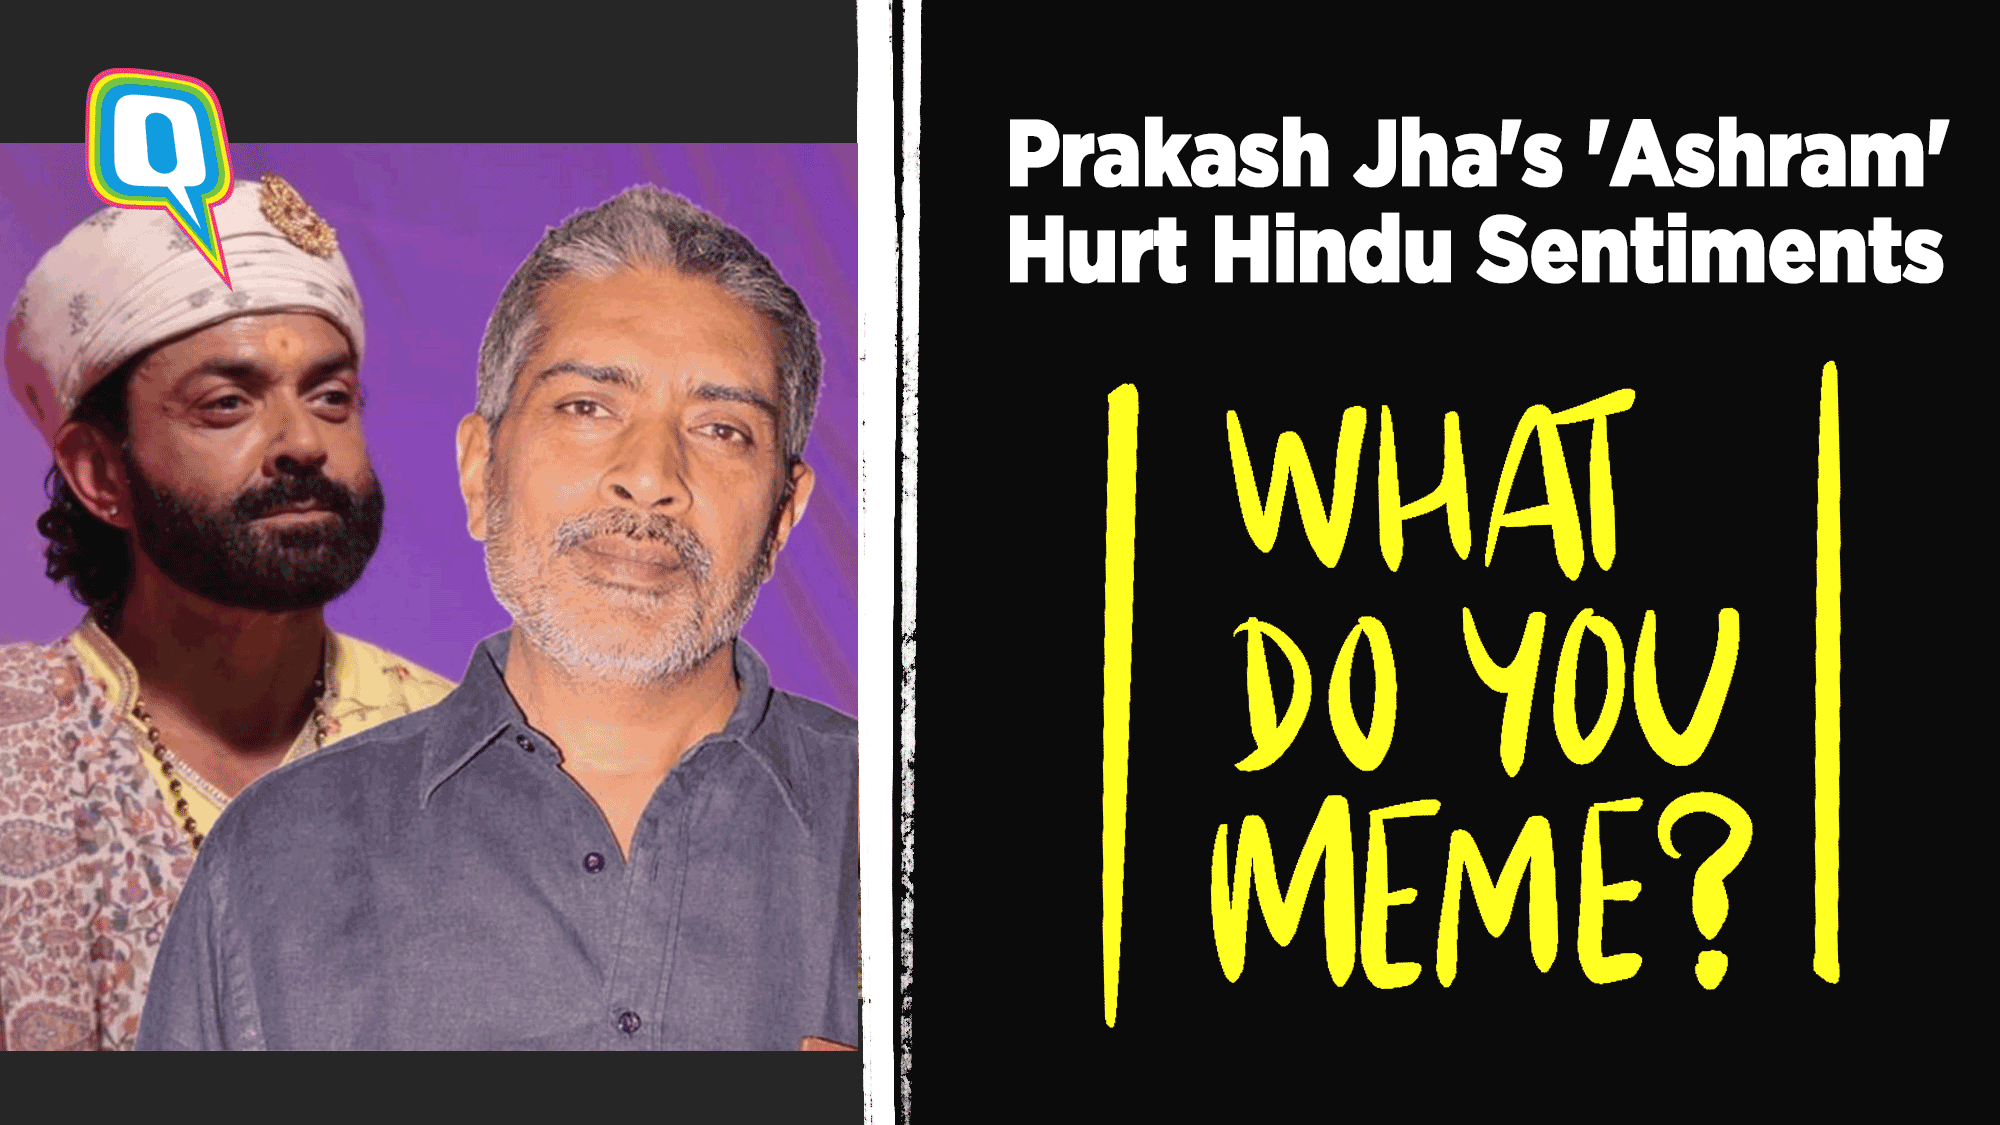 <div class="paragraphs"><p>How Prakash Jha's show "Ashram" hurt Hindu sentiments.</p></div>